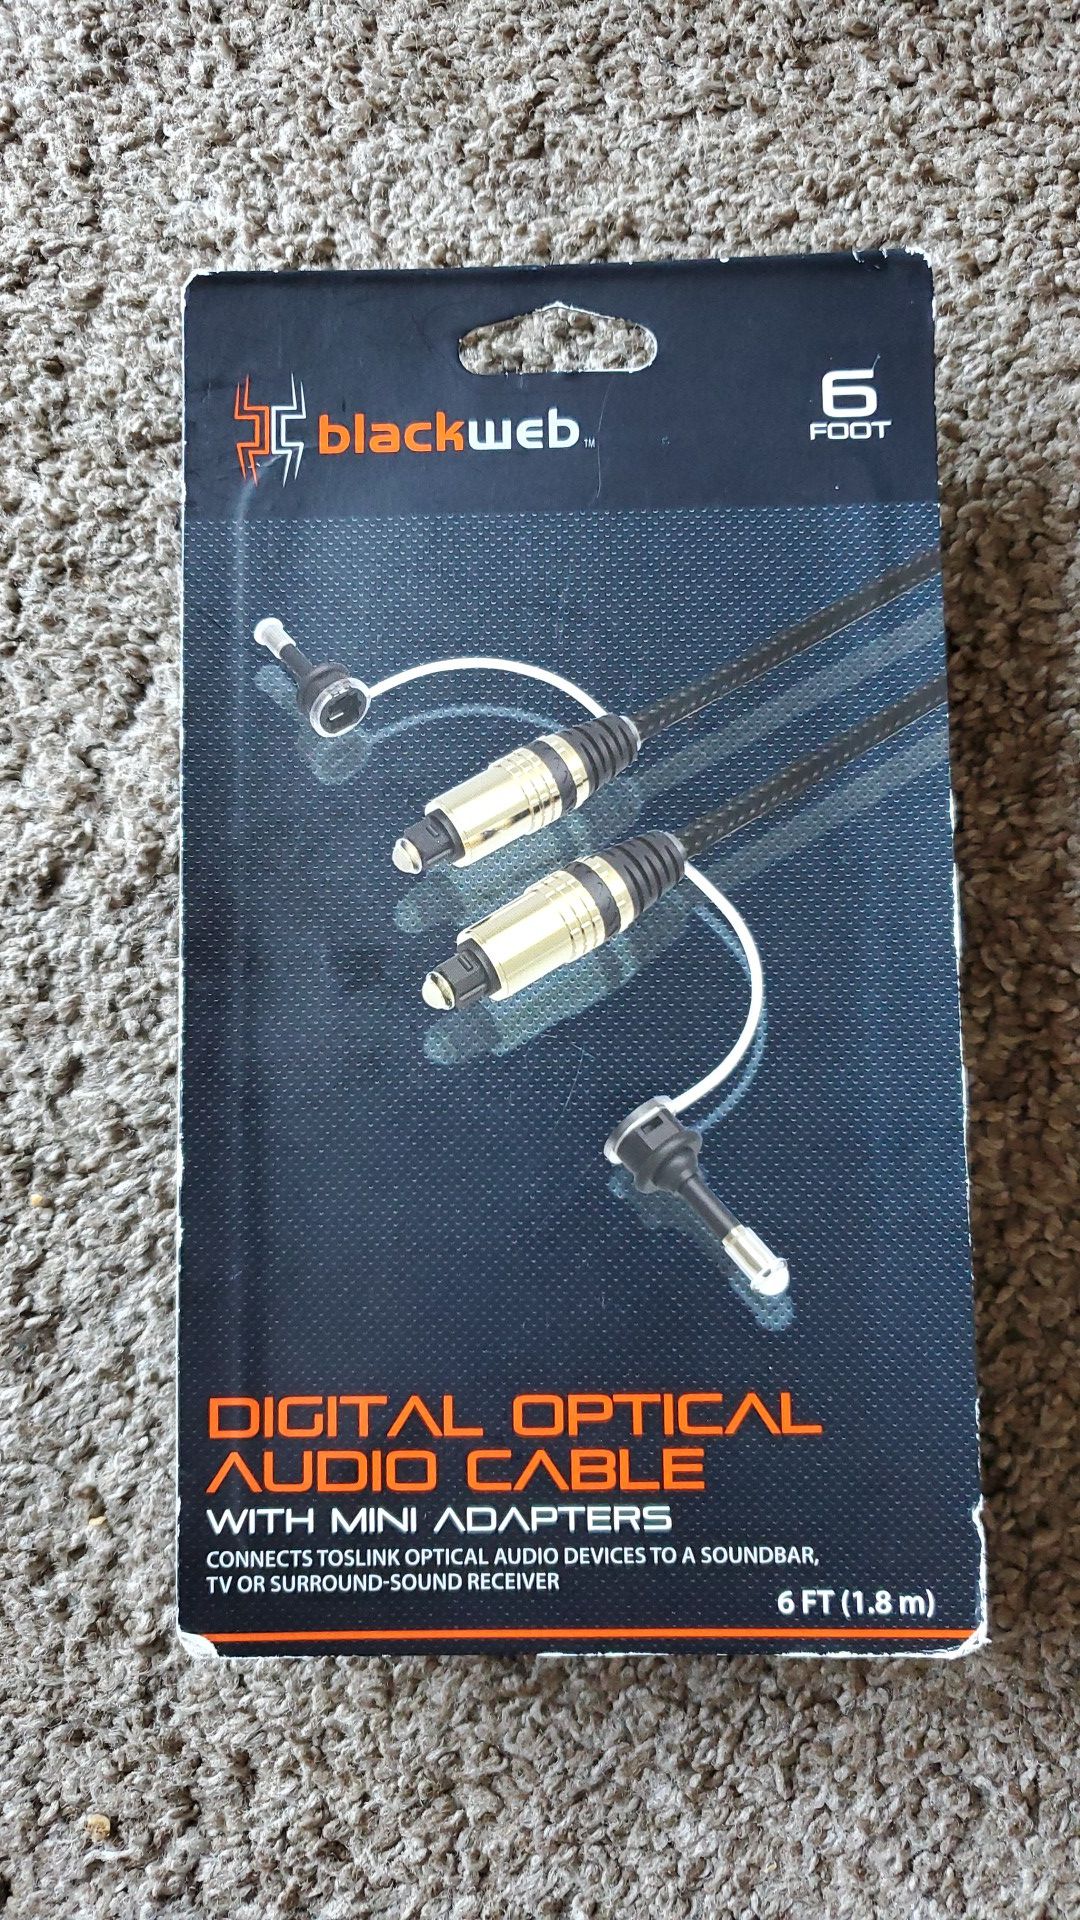 Digital optical audio cable